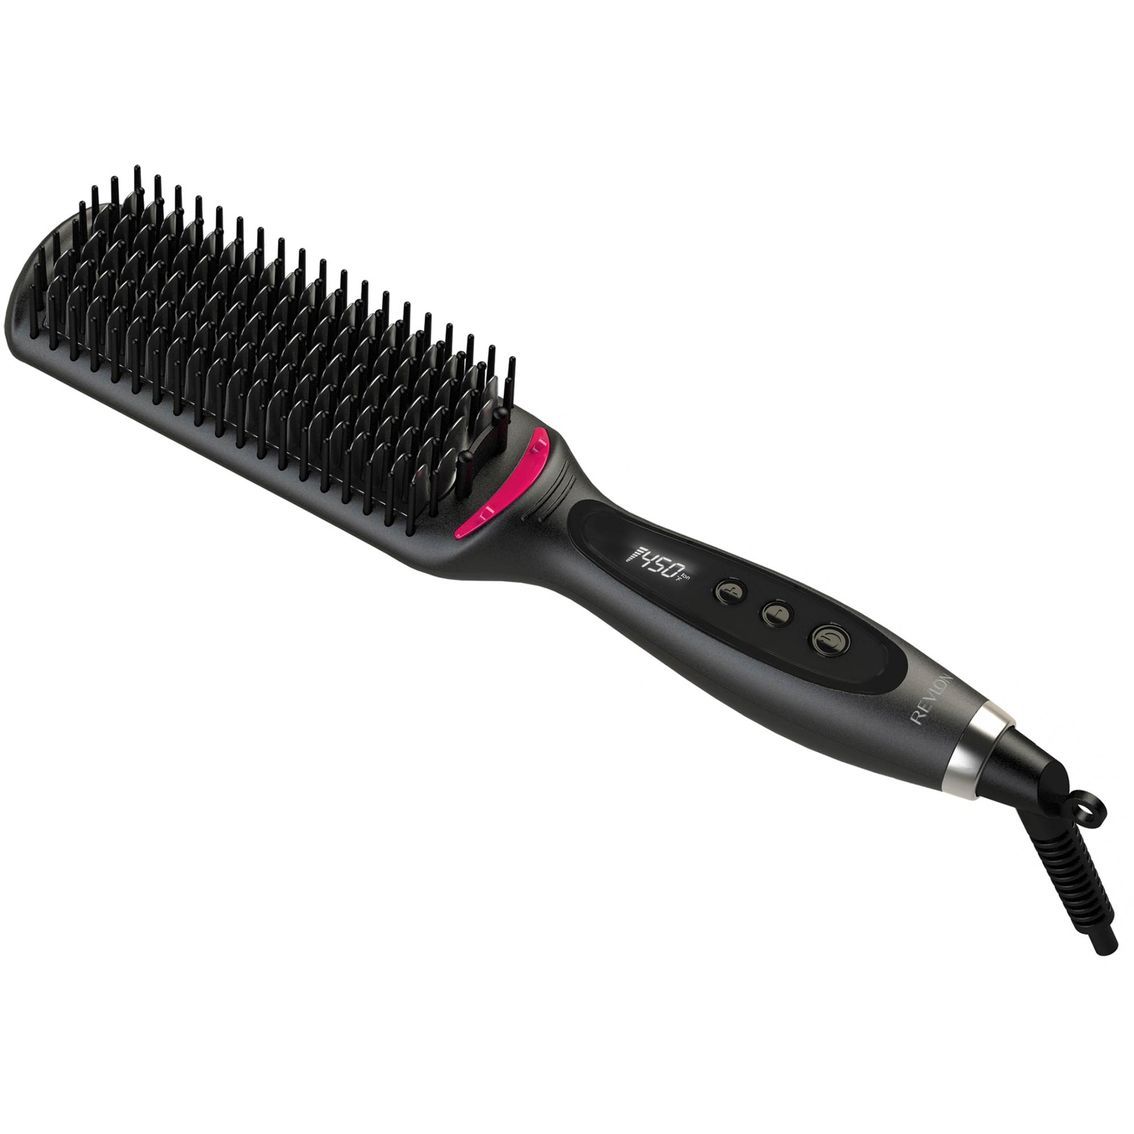 12 Best Hair Straightener Brushes For Time-Saving Hair Styling